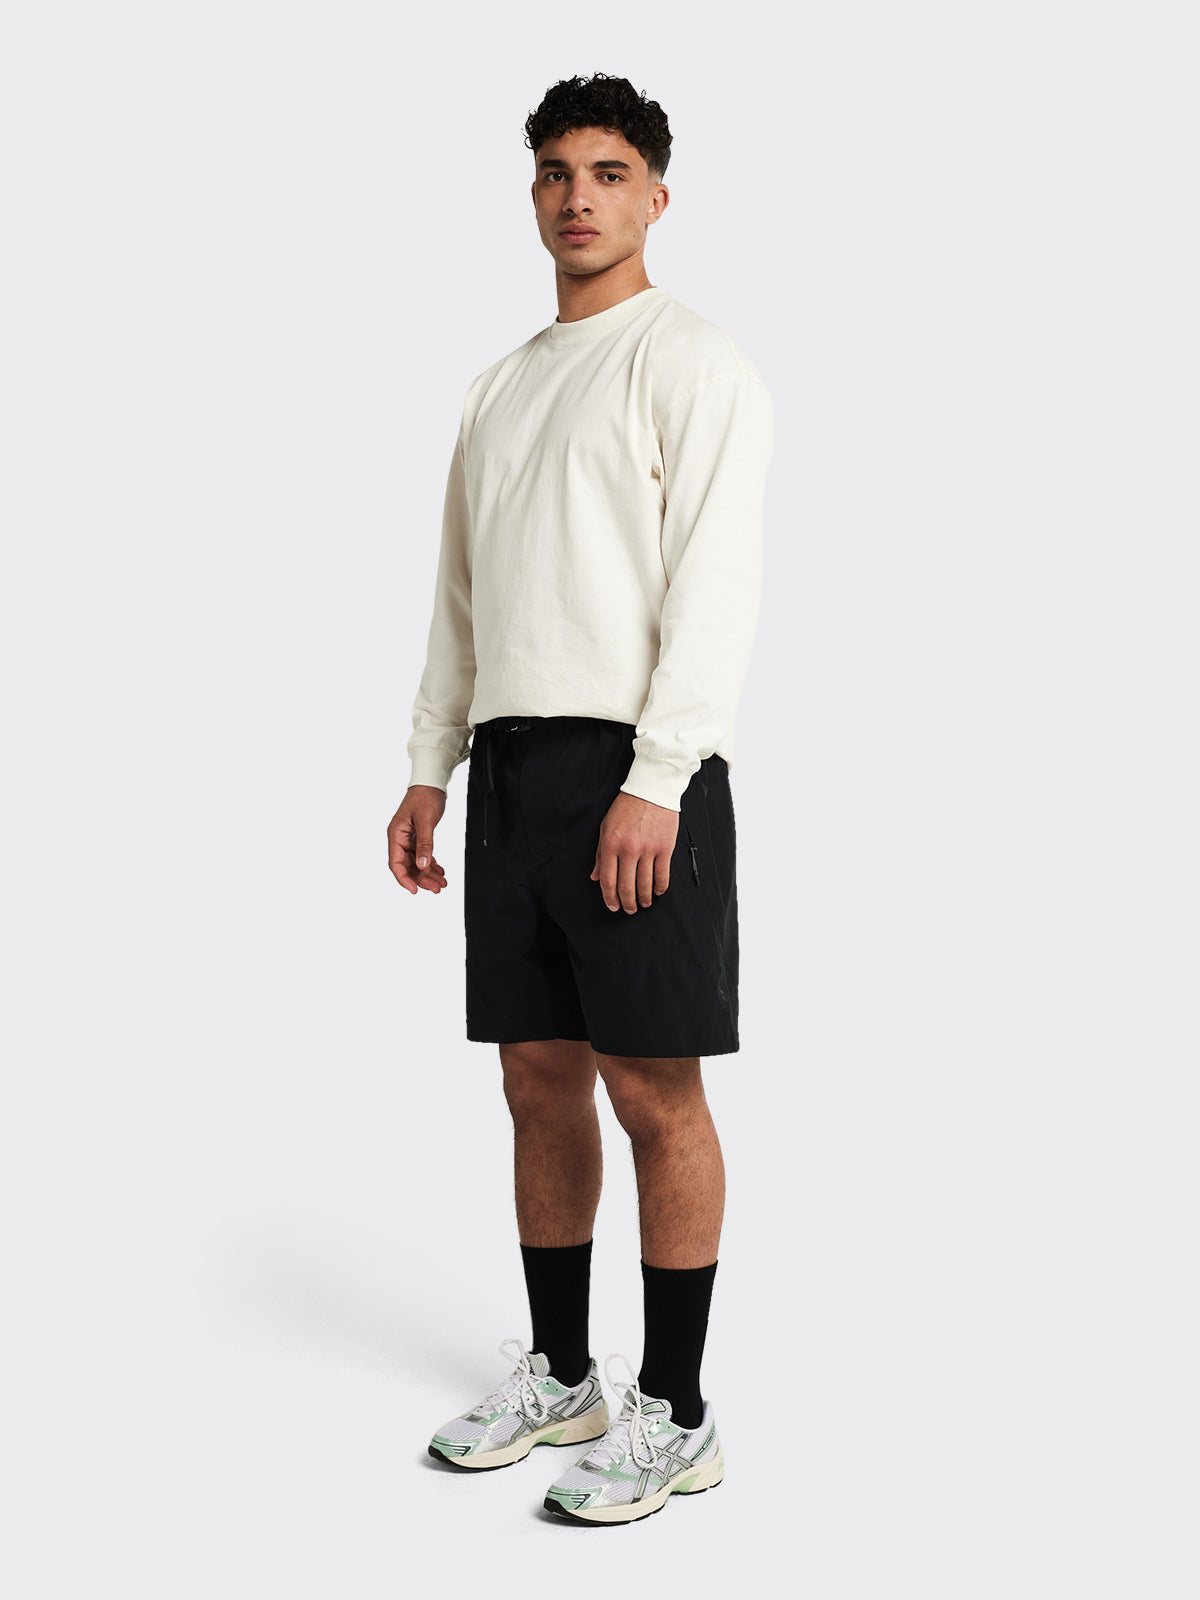 Man dressed in Helleren RS shorts from Blæst in Black